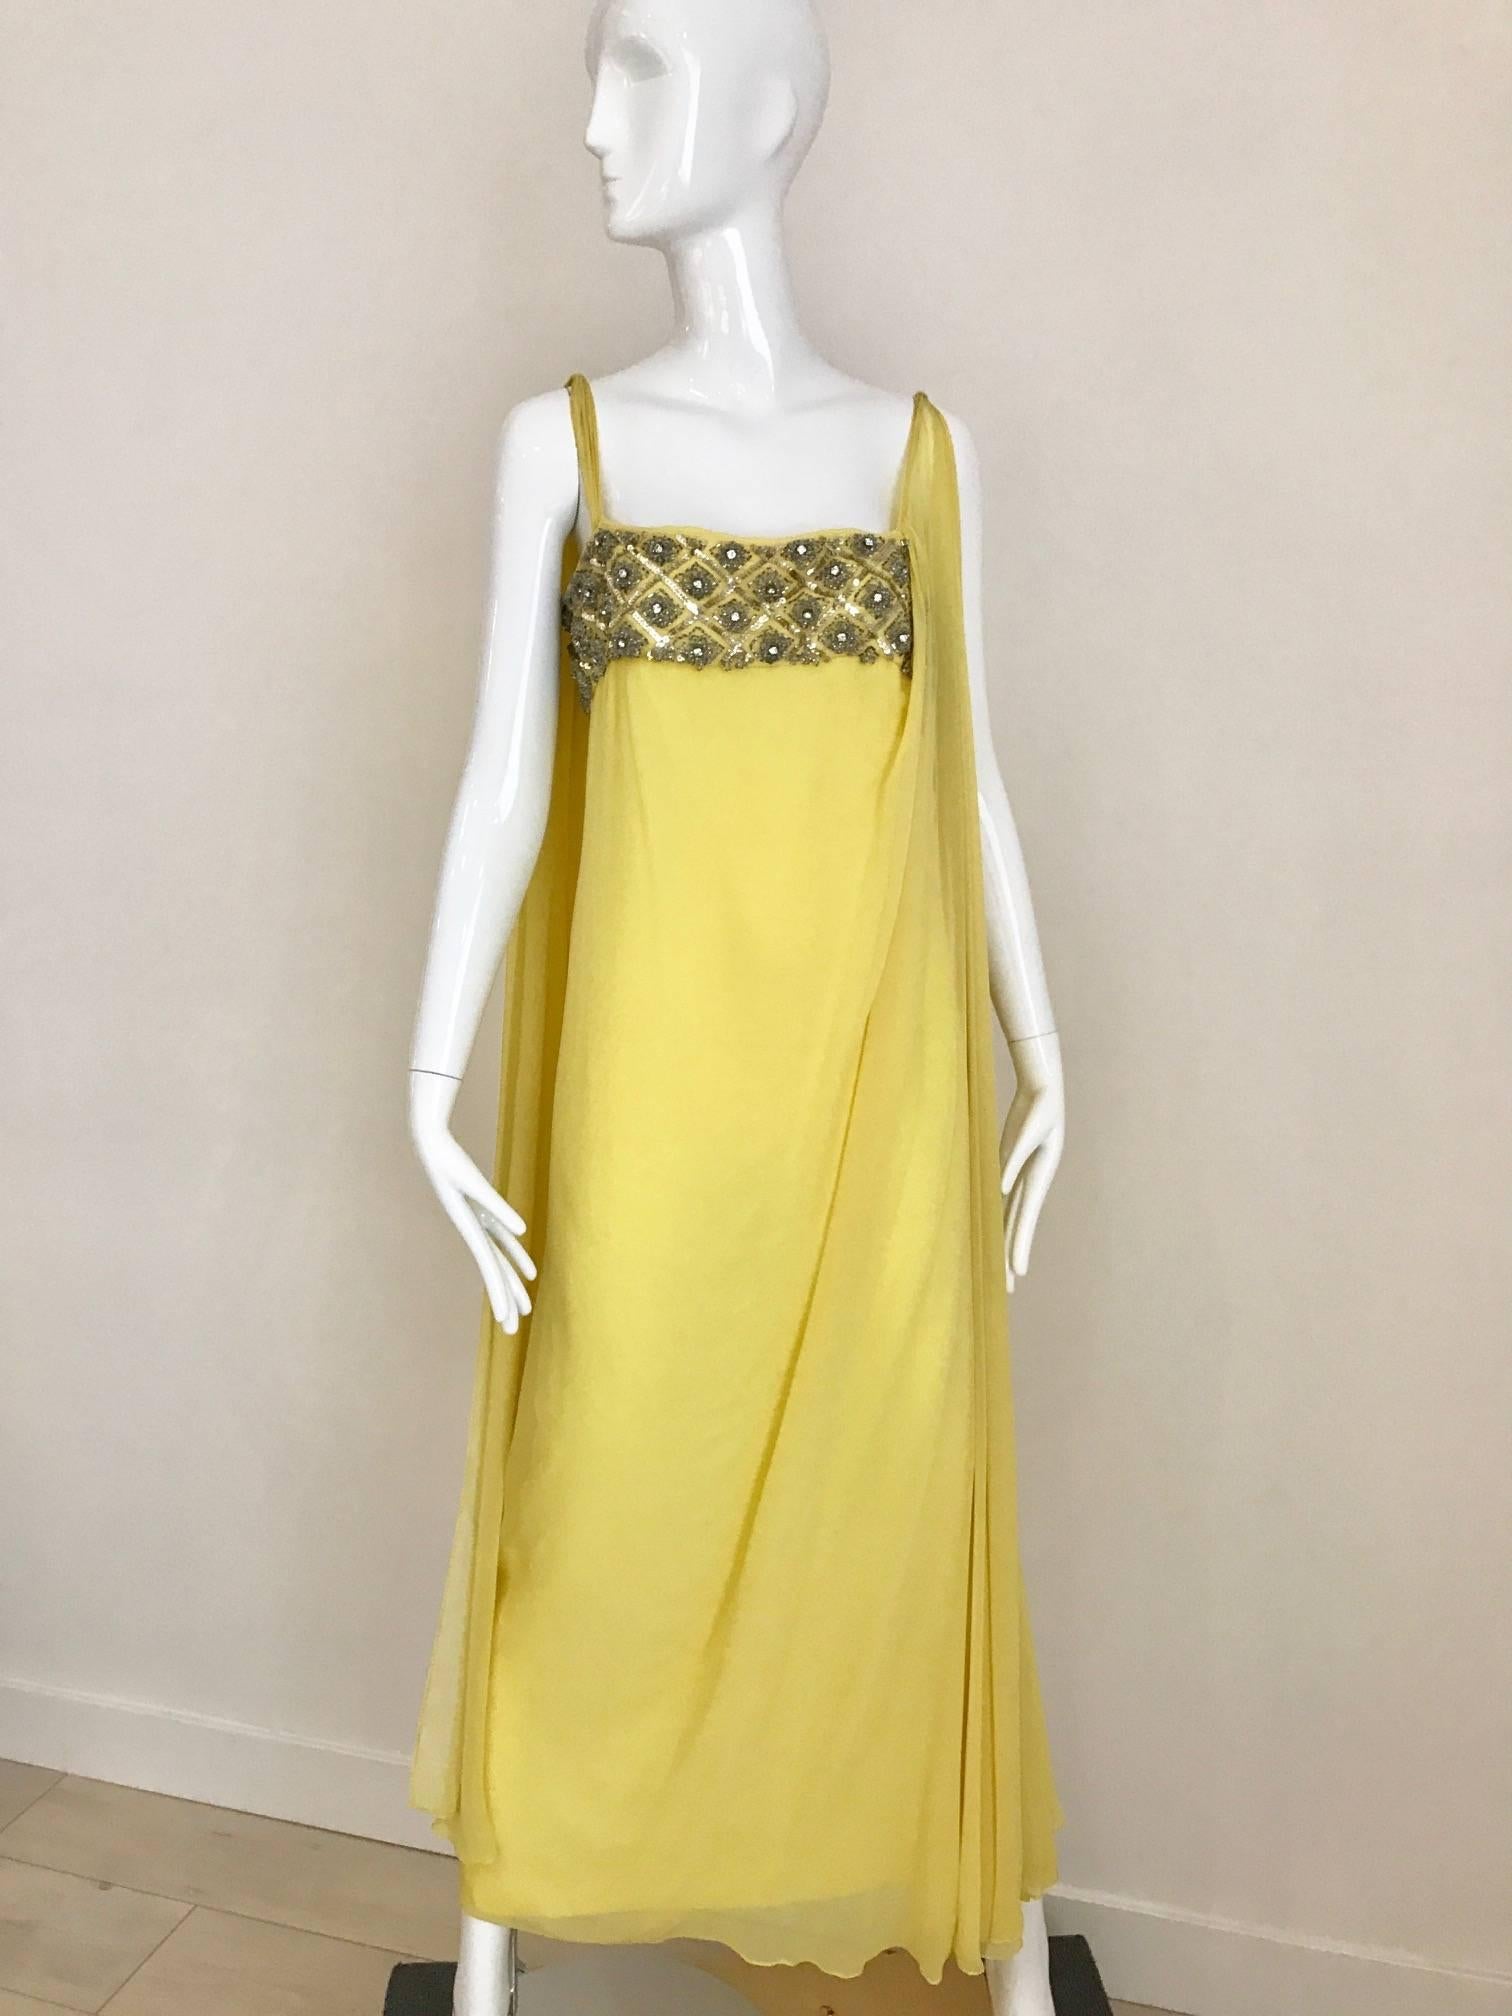 yellow grecian dress